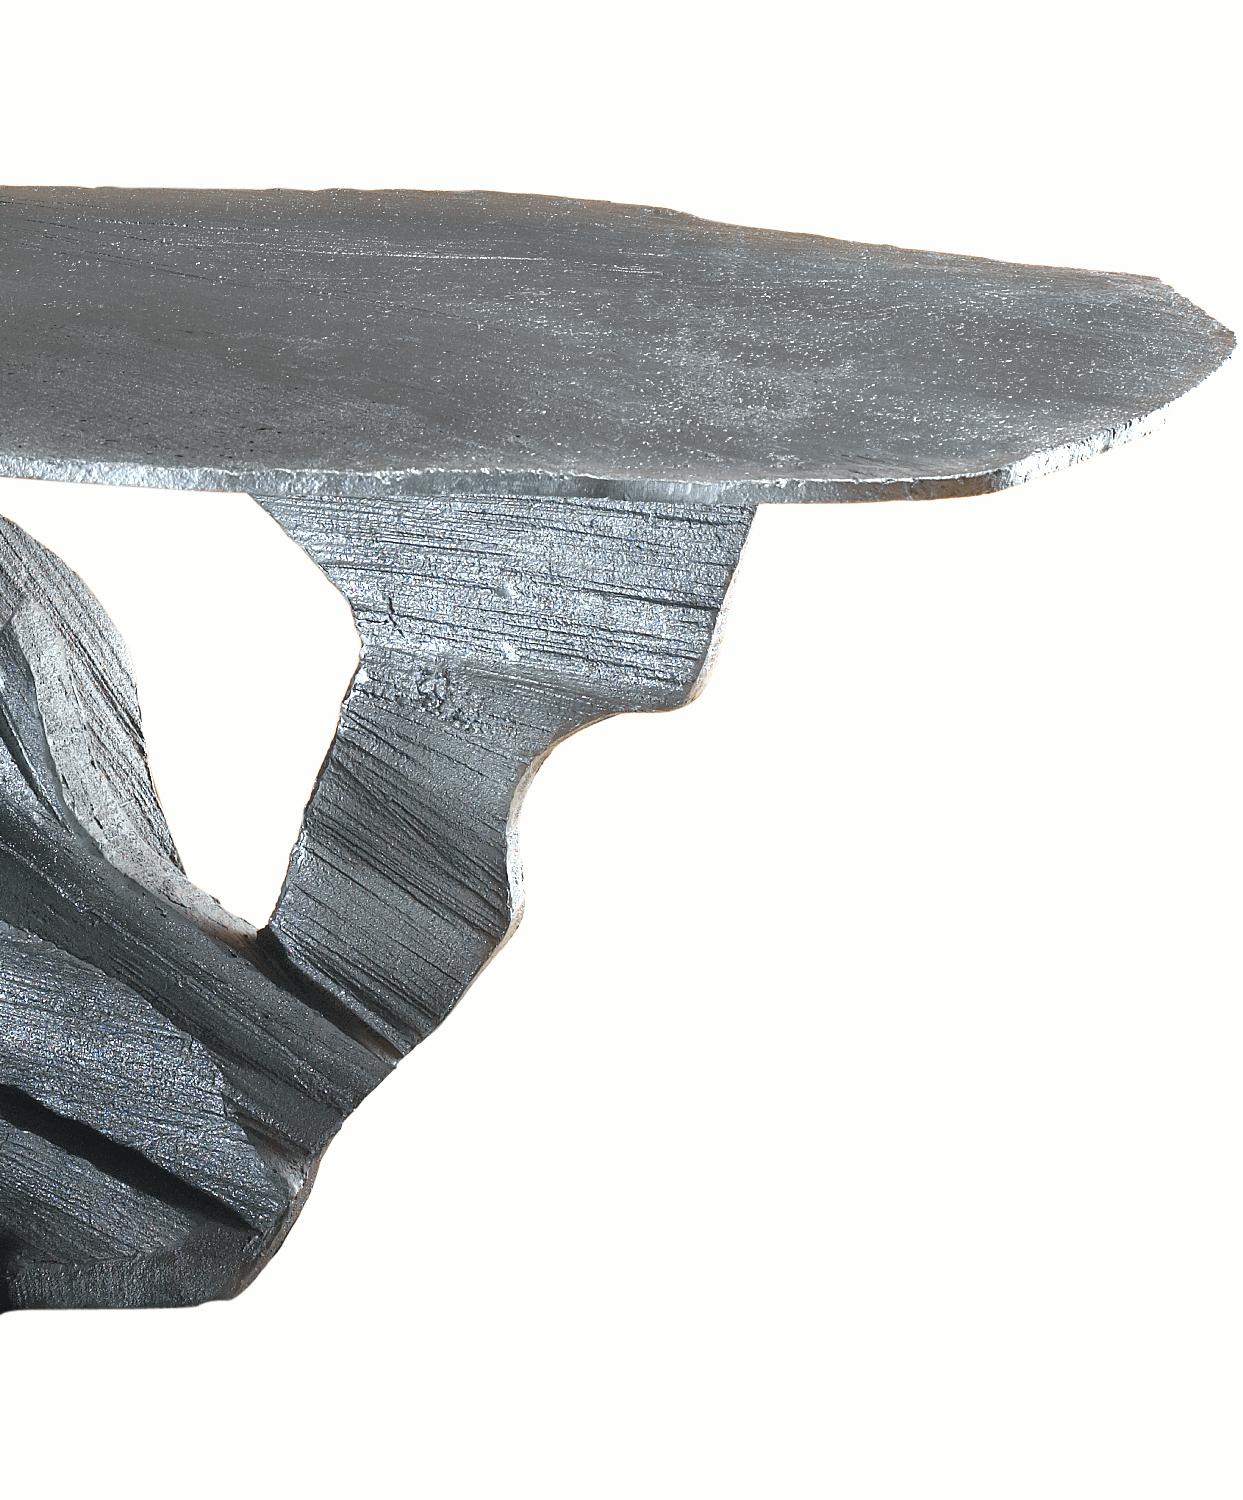 Brutalist Ansel Adams Inspired Sculpted Cast Aluminum Table